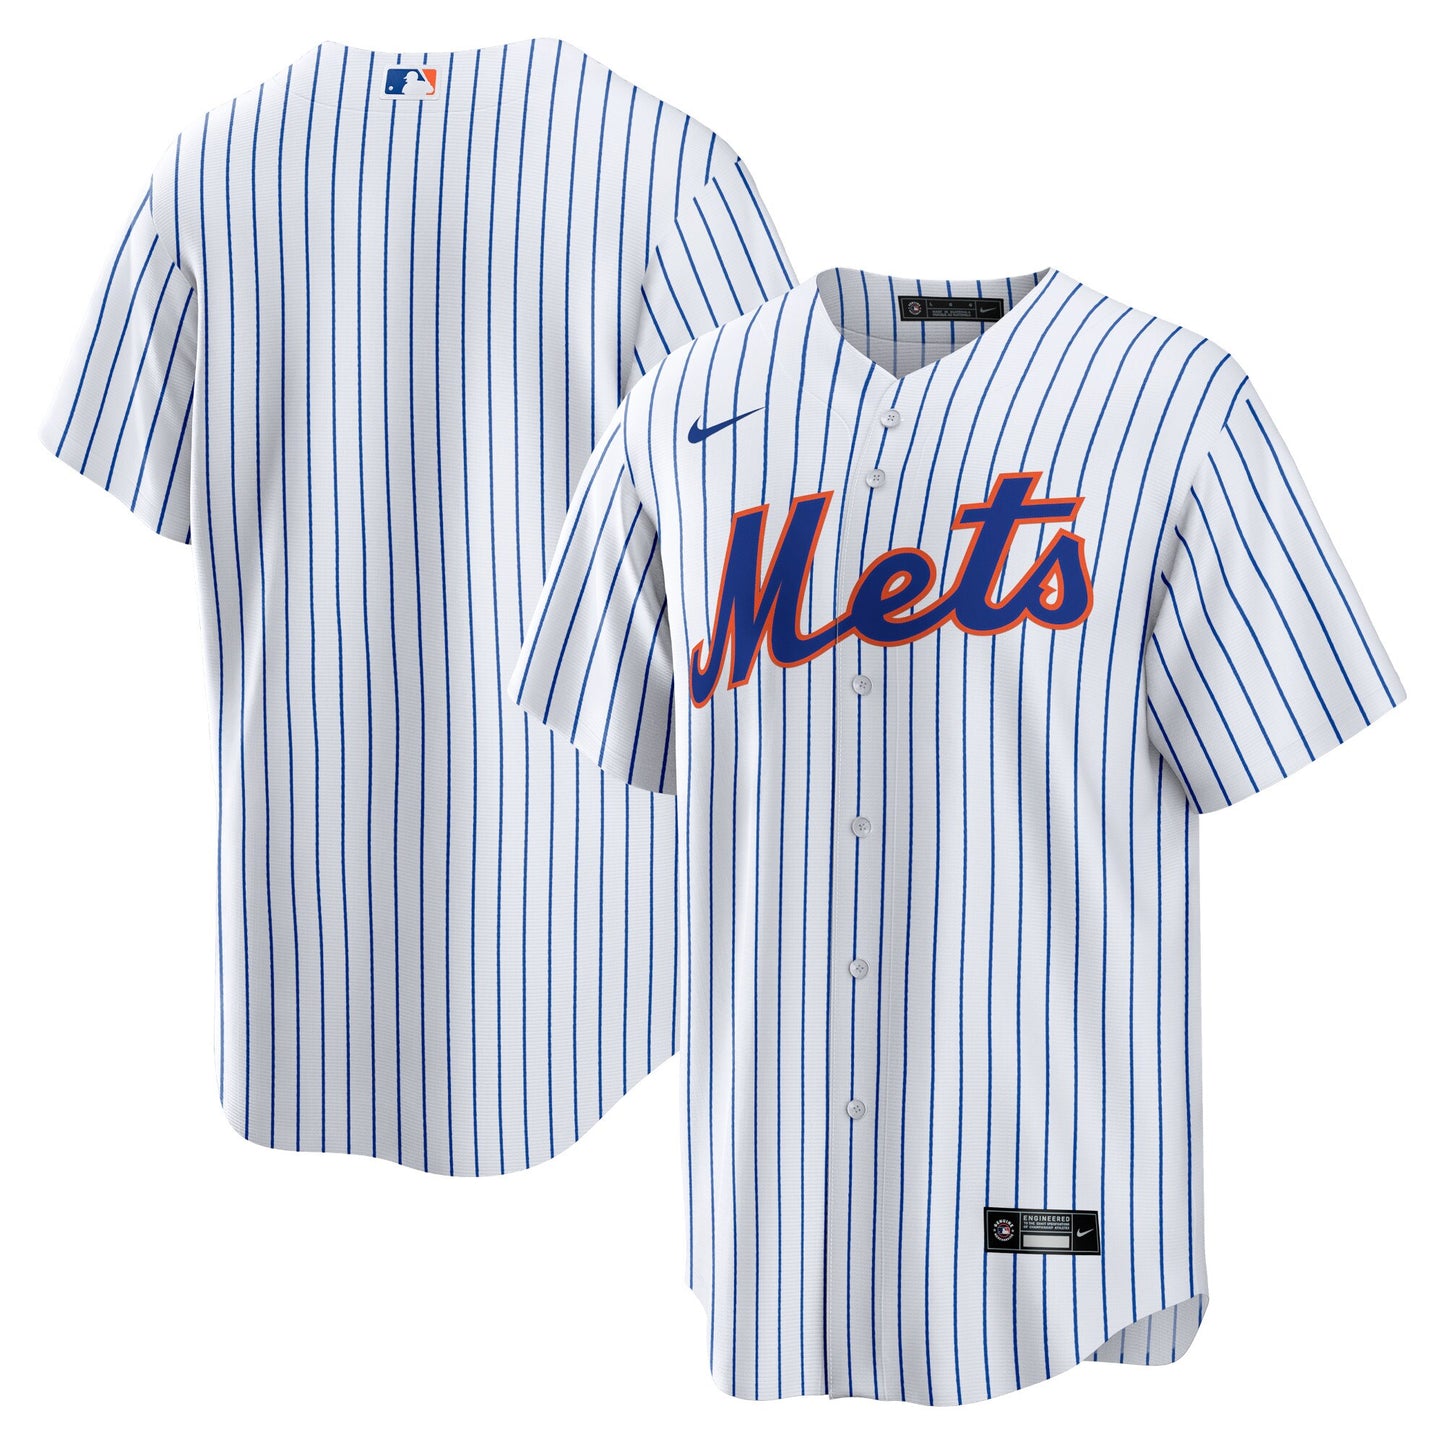 New York Mets Nike Home Blank Replica Jersey - White